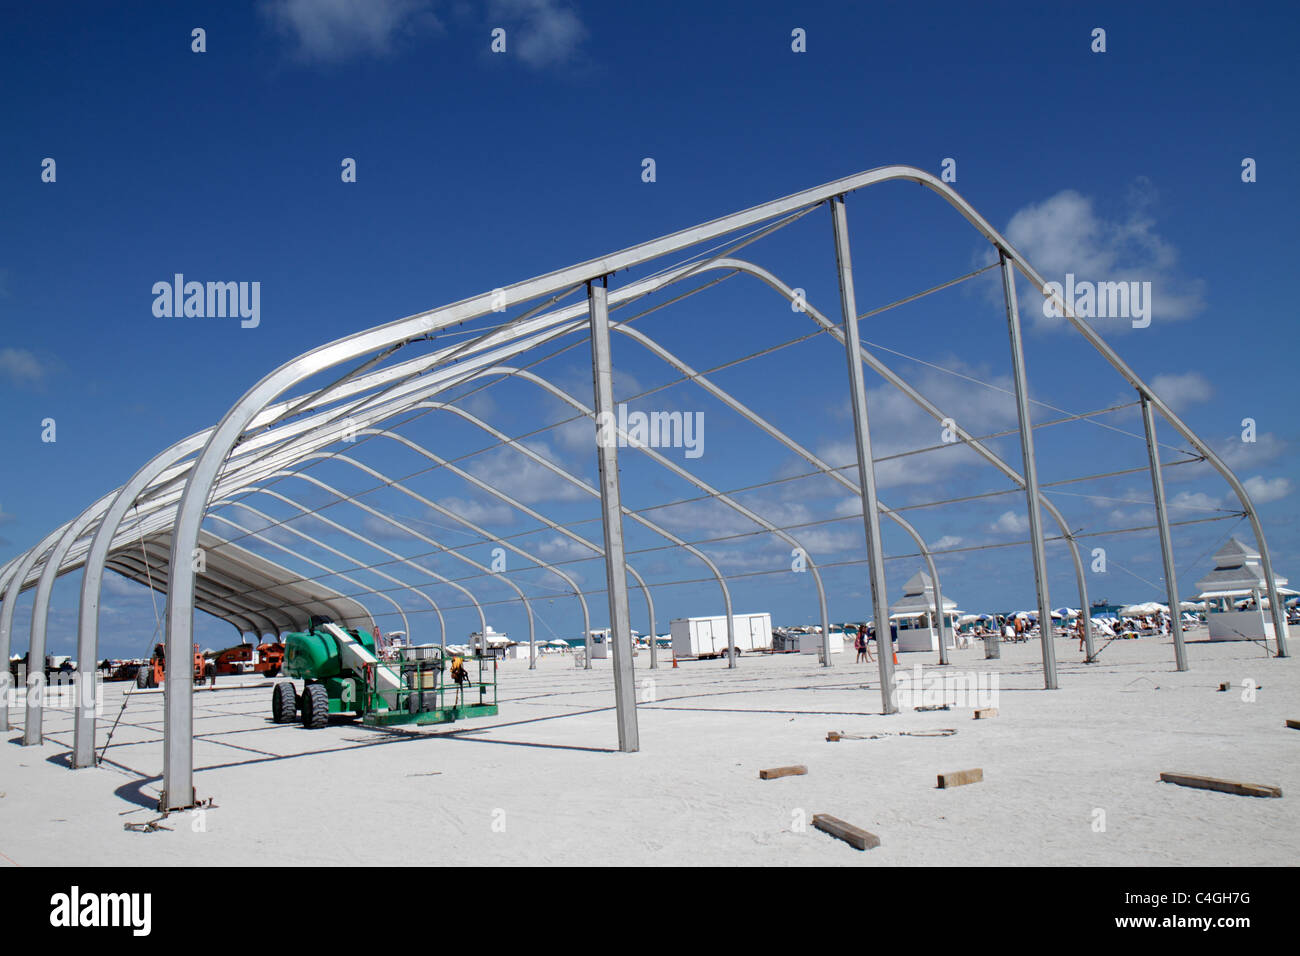 Miami Beach Florida, temporäres Zelt, Pavillon, unter Neubau Baumeister,  Rahmen, Rahmen, Metall, Aluminium, öffentliche Strände, Besucher  Stockfotografie - Alamy